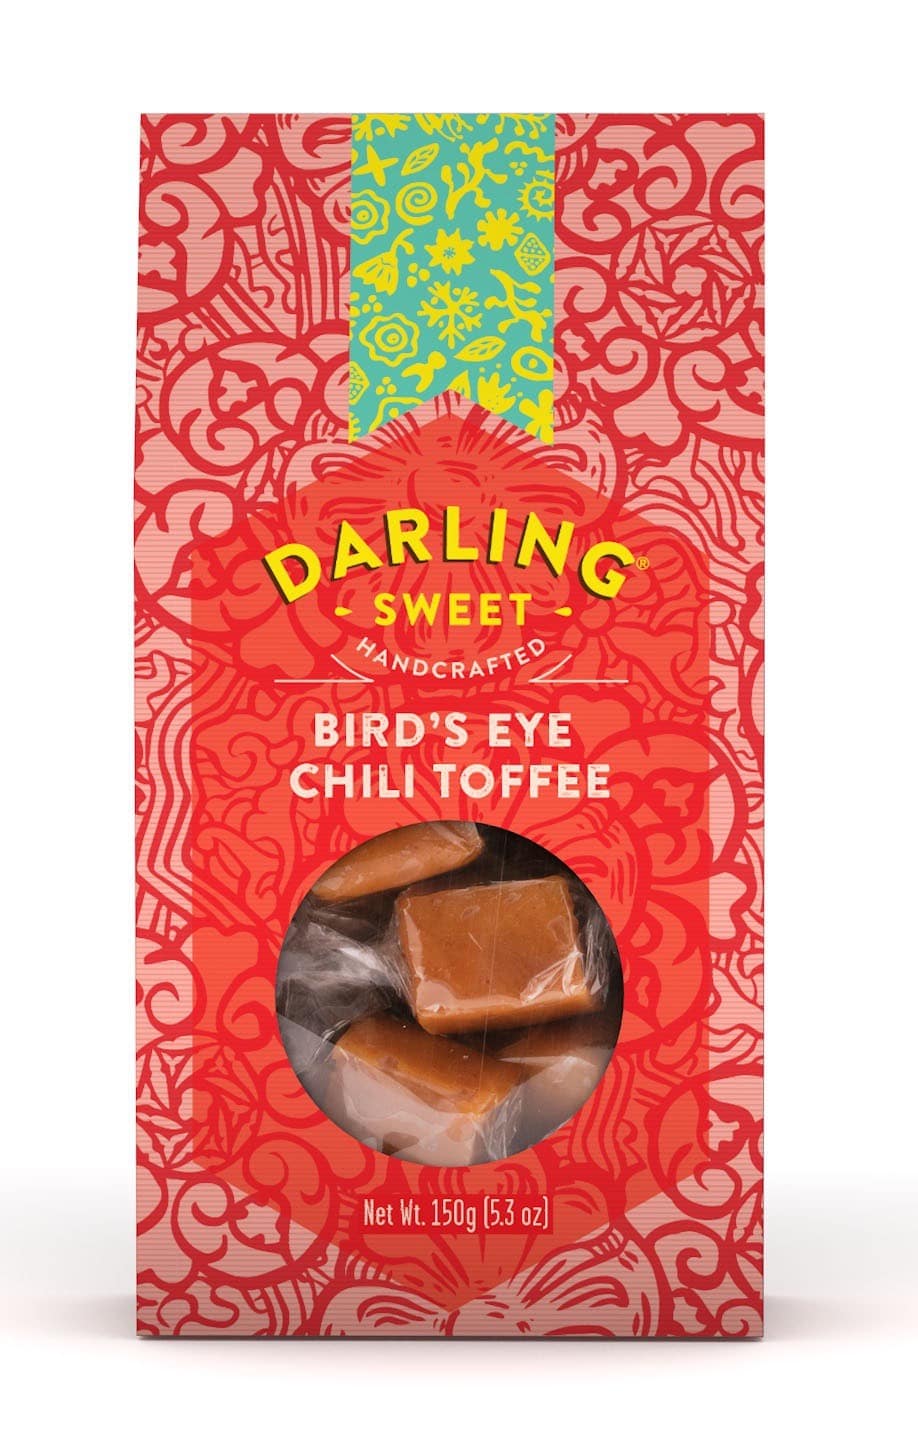 Darling Sweet Birds Eye Chili Toffee 150g